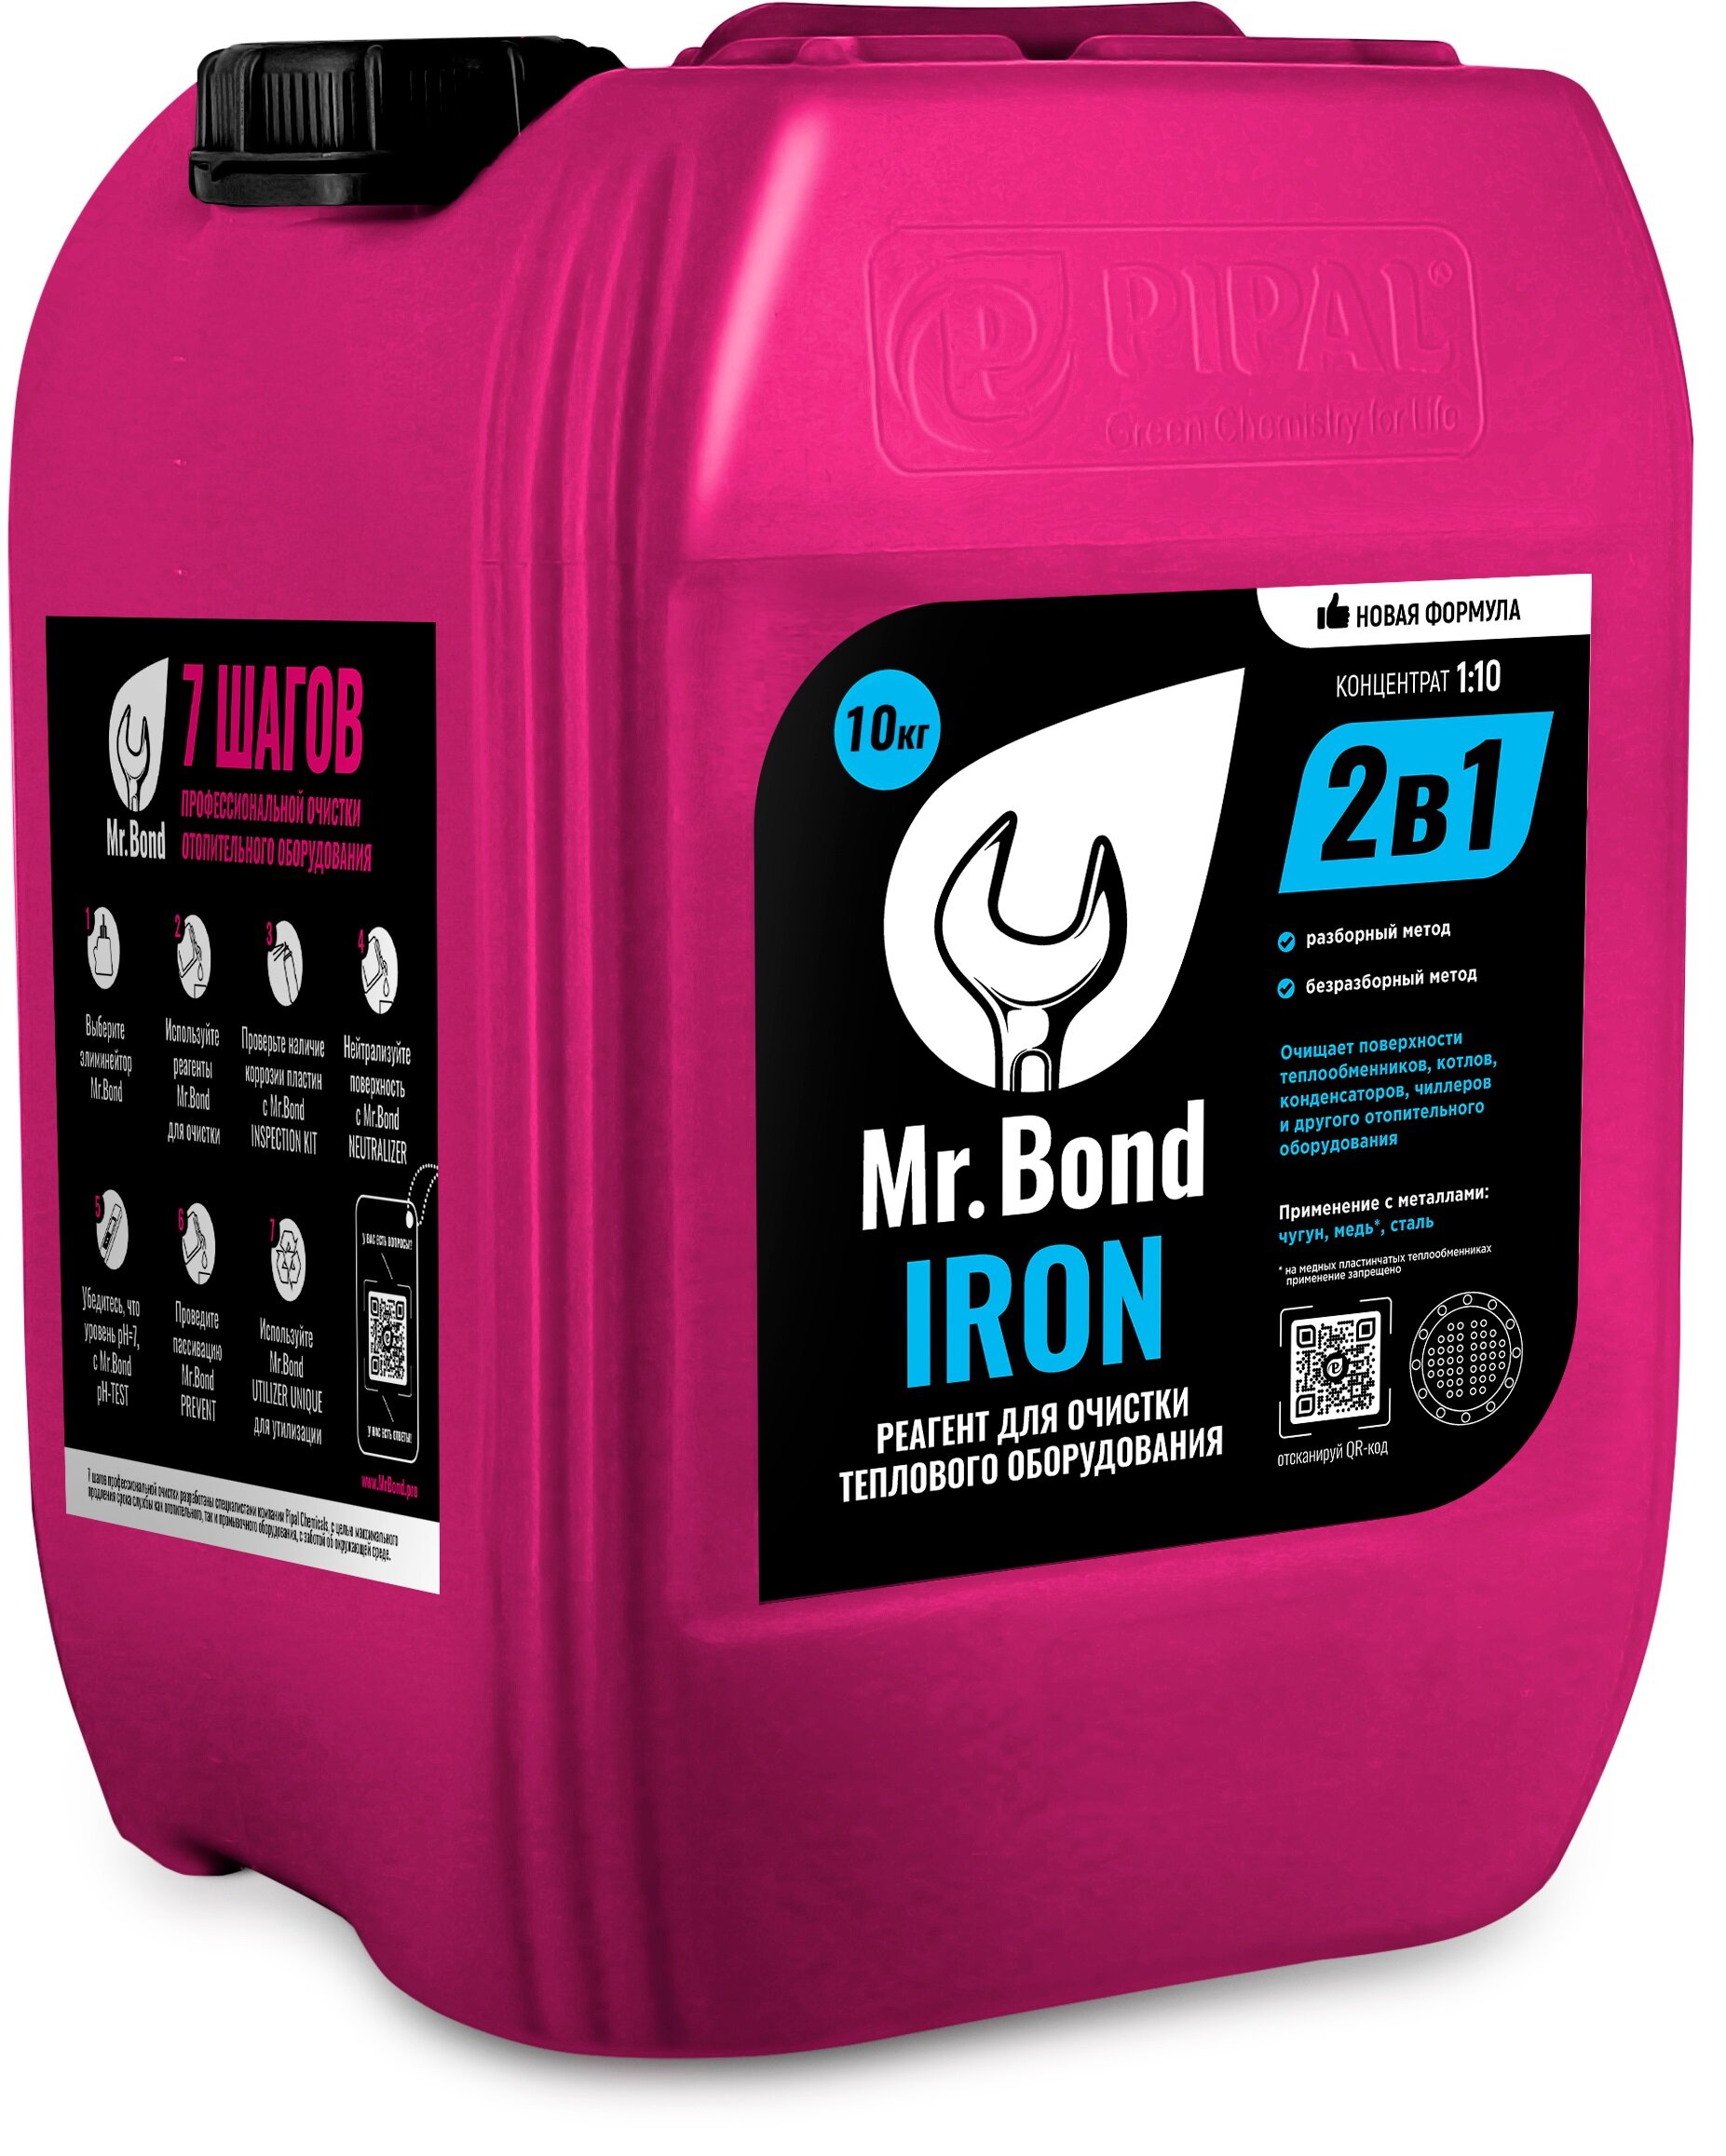 Реагент для очистки теплового оборудования Mr.Bond IRON 10 кг